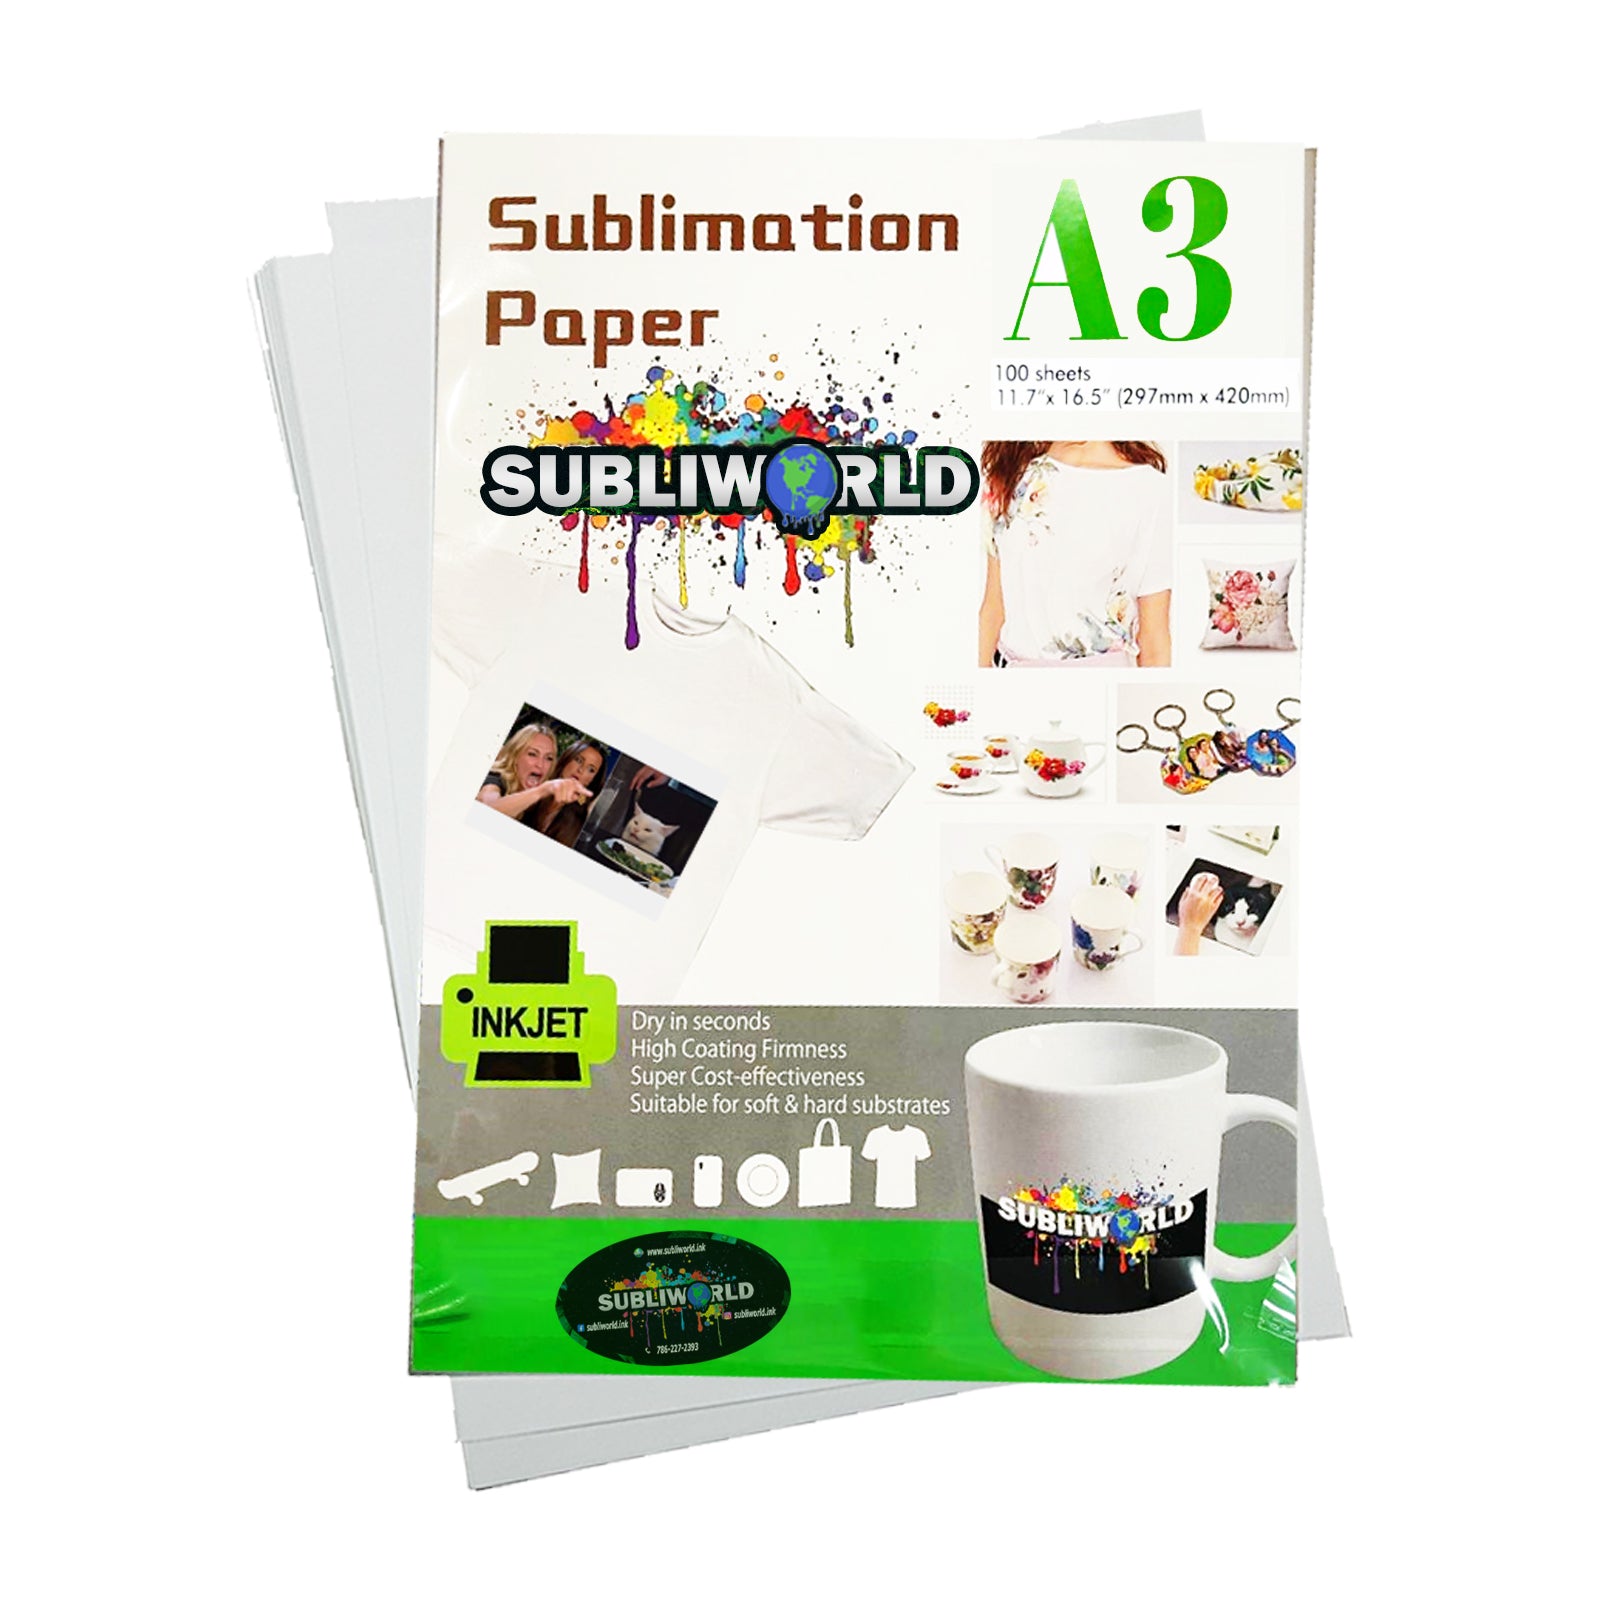 Sublimation Paper (A3 Size) (11.7 x16.5) (297mmx 420mm) | Subliworld